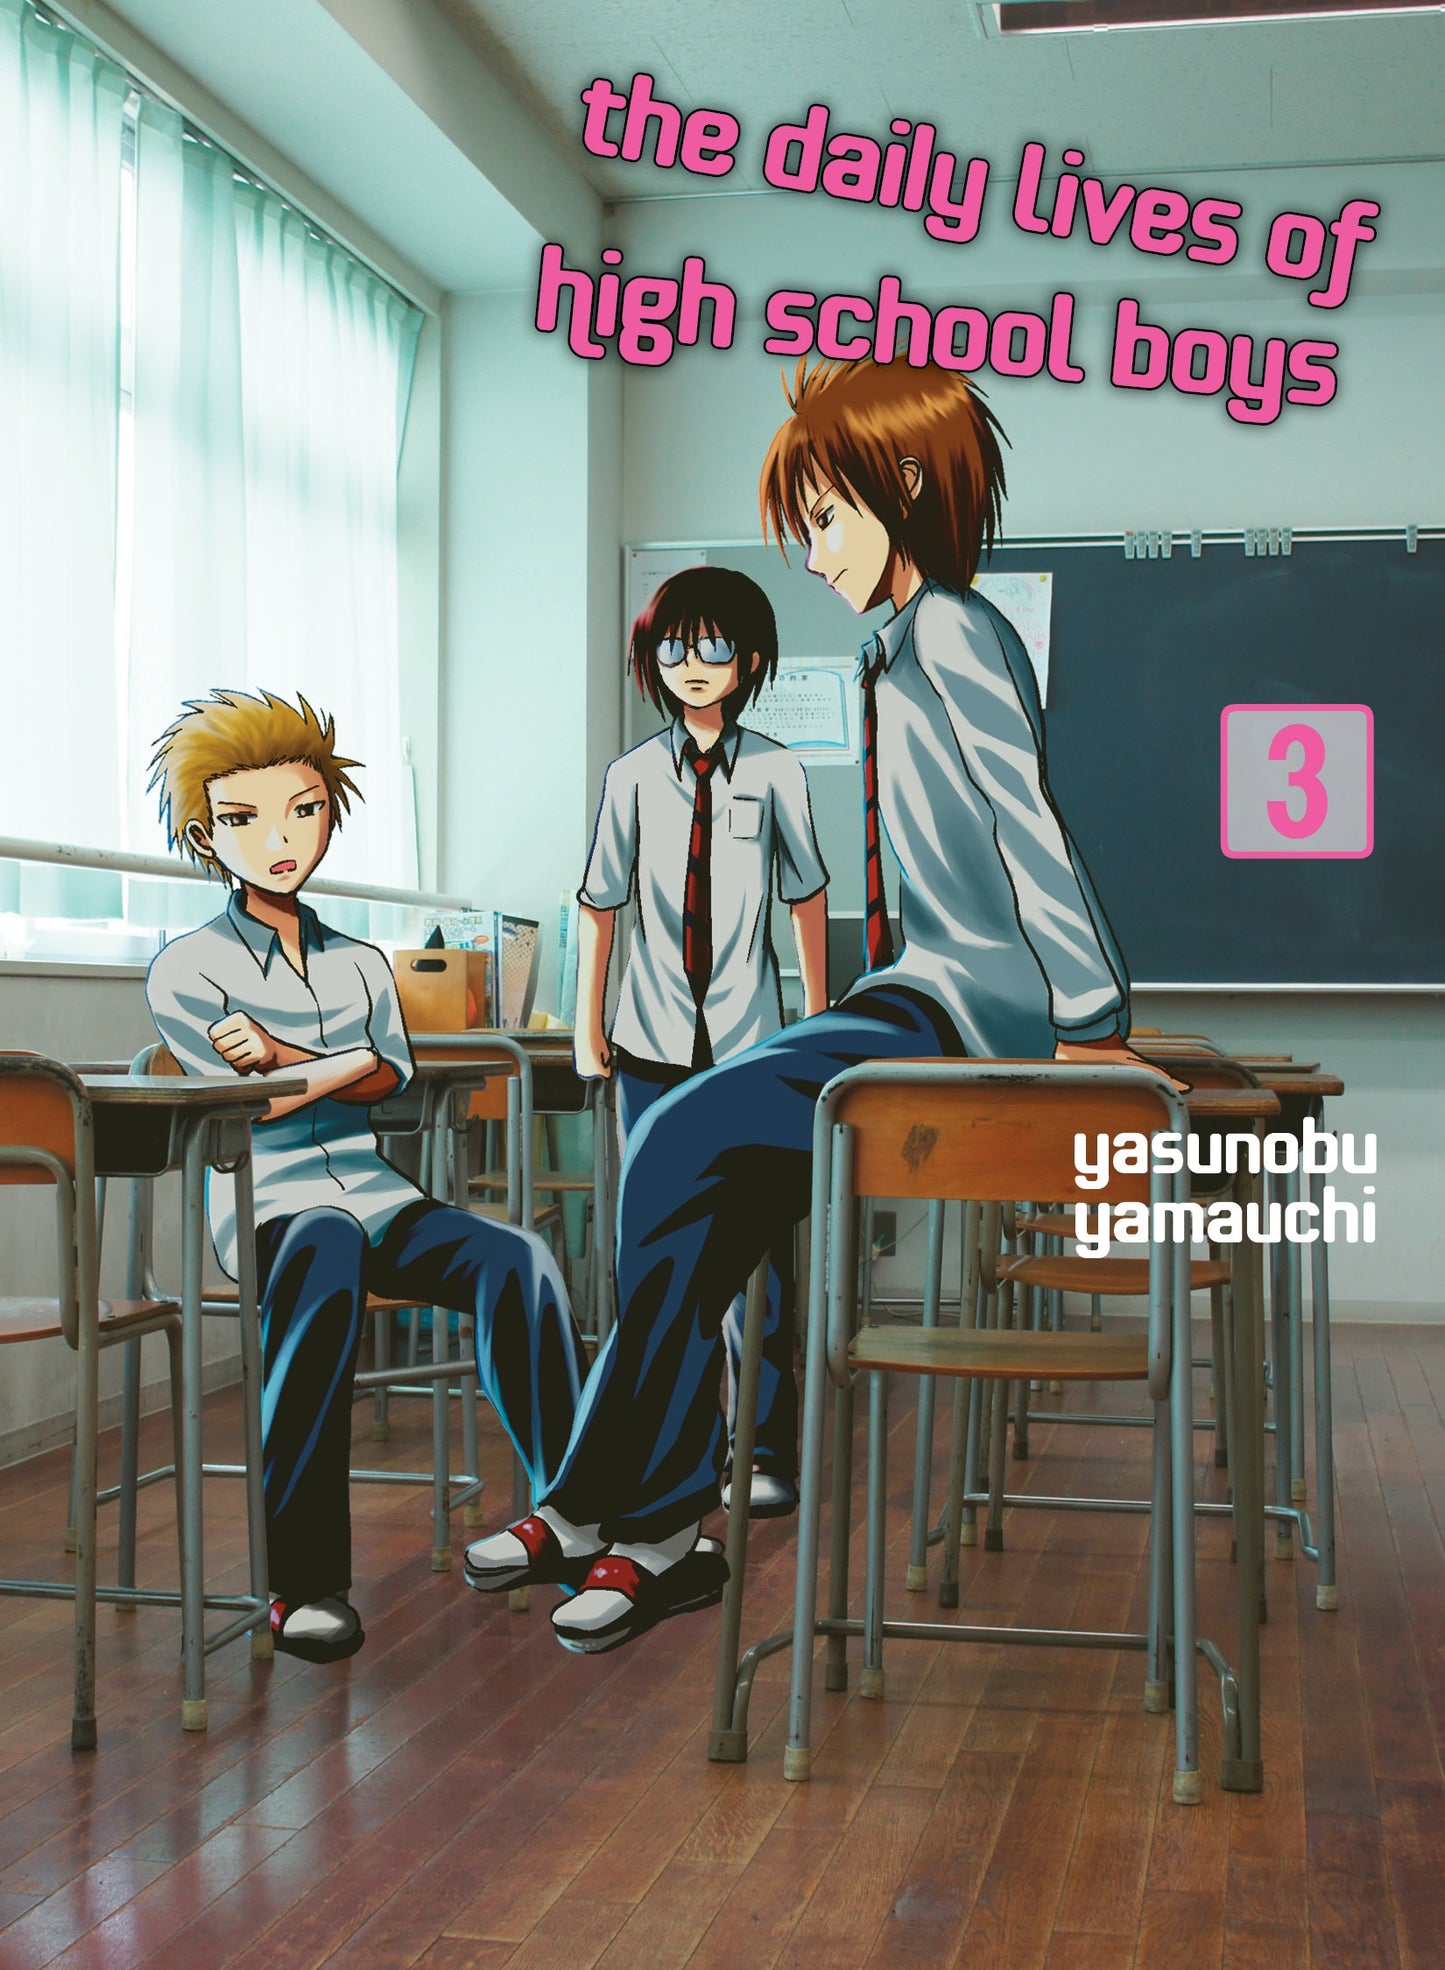 The Daily Lives of High School Boys, volume 3 - Manga Warehouse